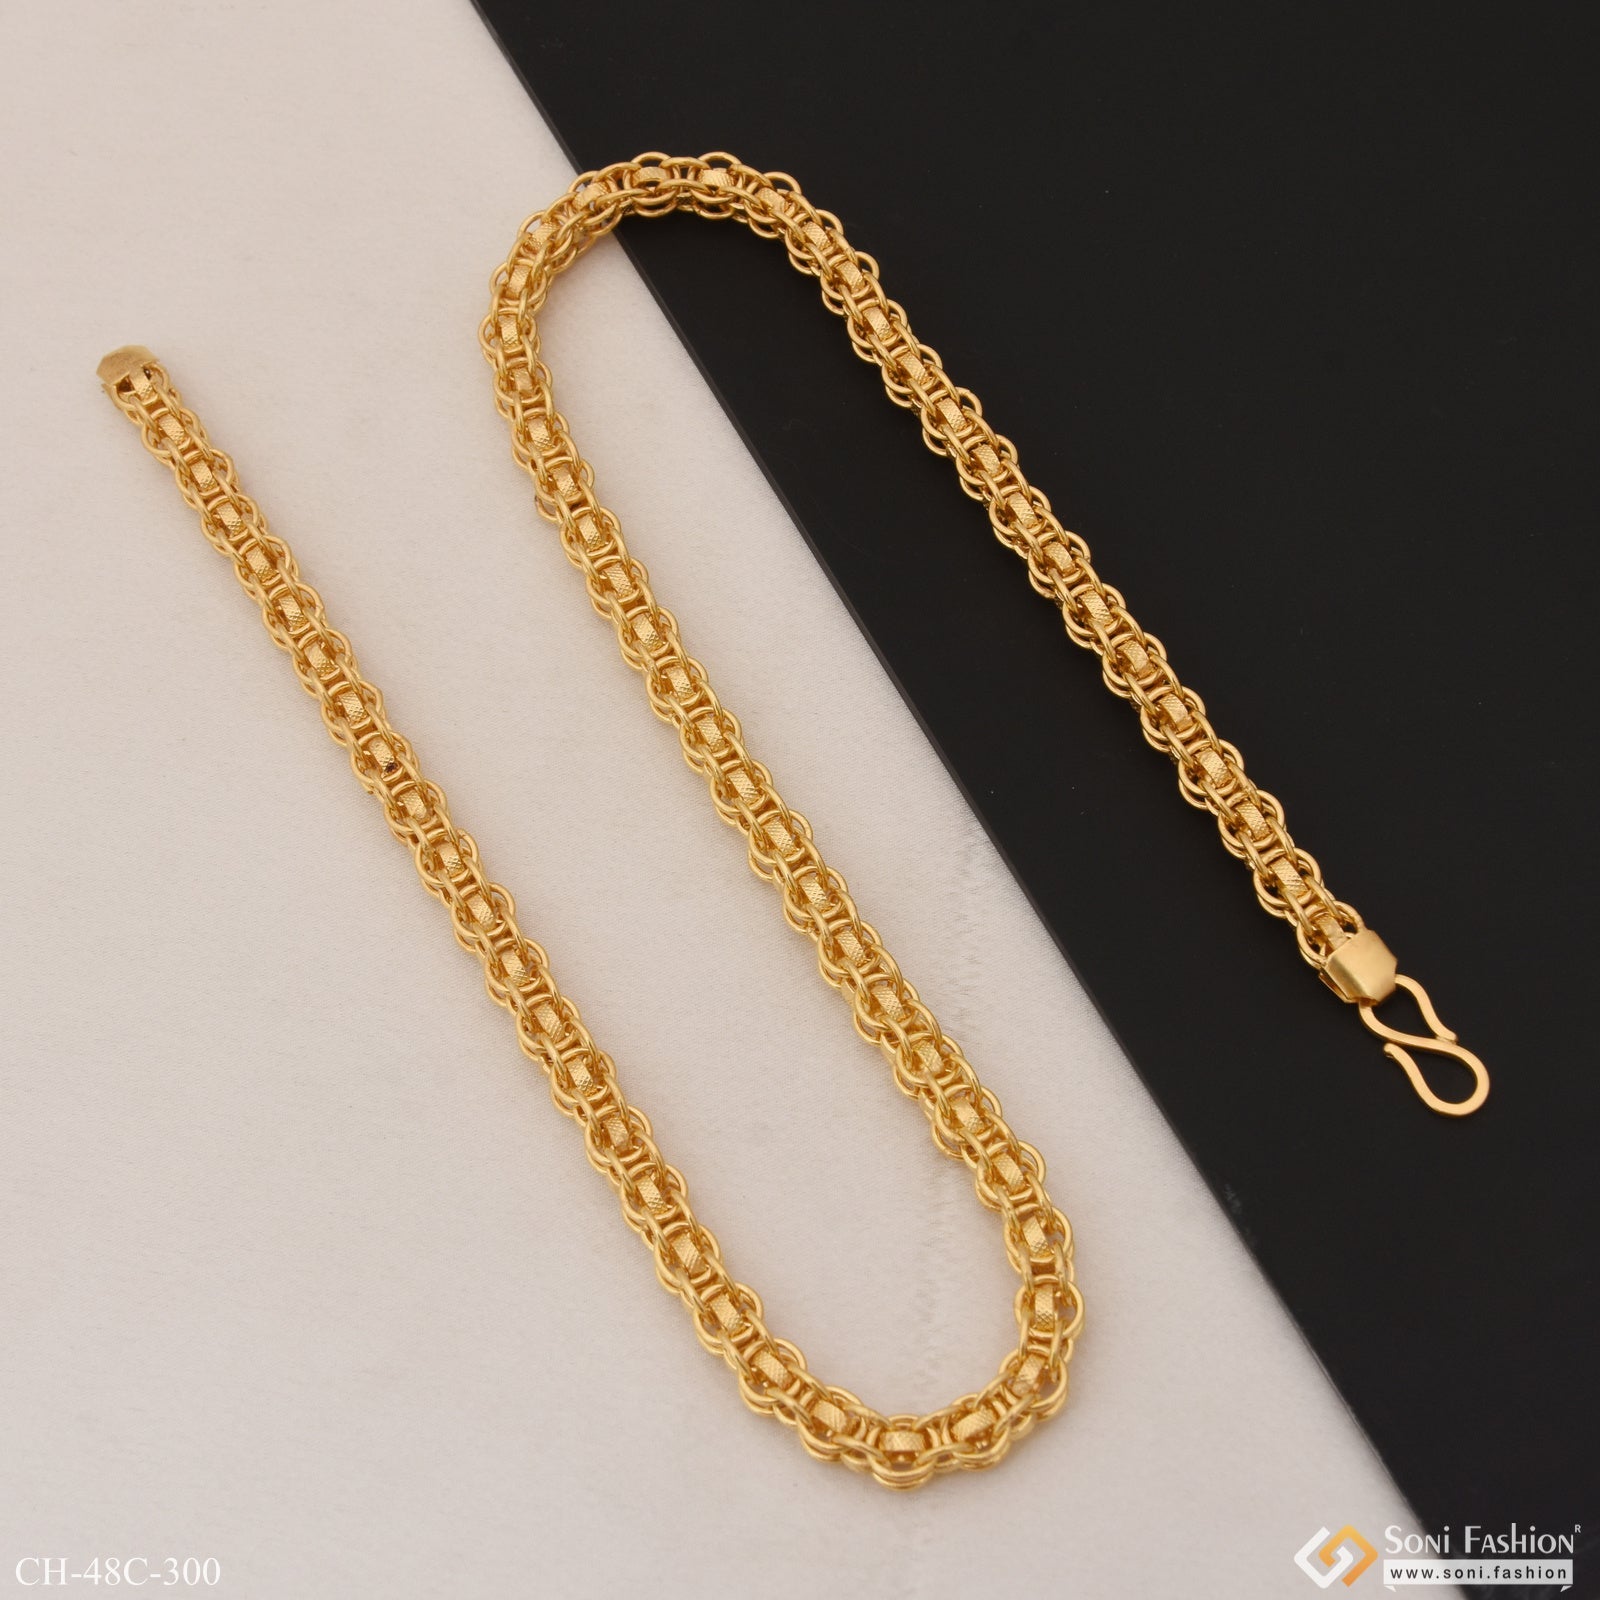 1 Gram Gold Plated Rajwadi Exquisite Design High-Quality Chain for Men - Style C300